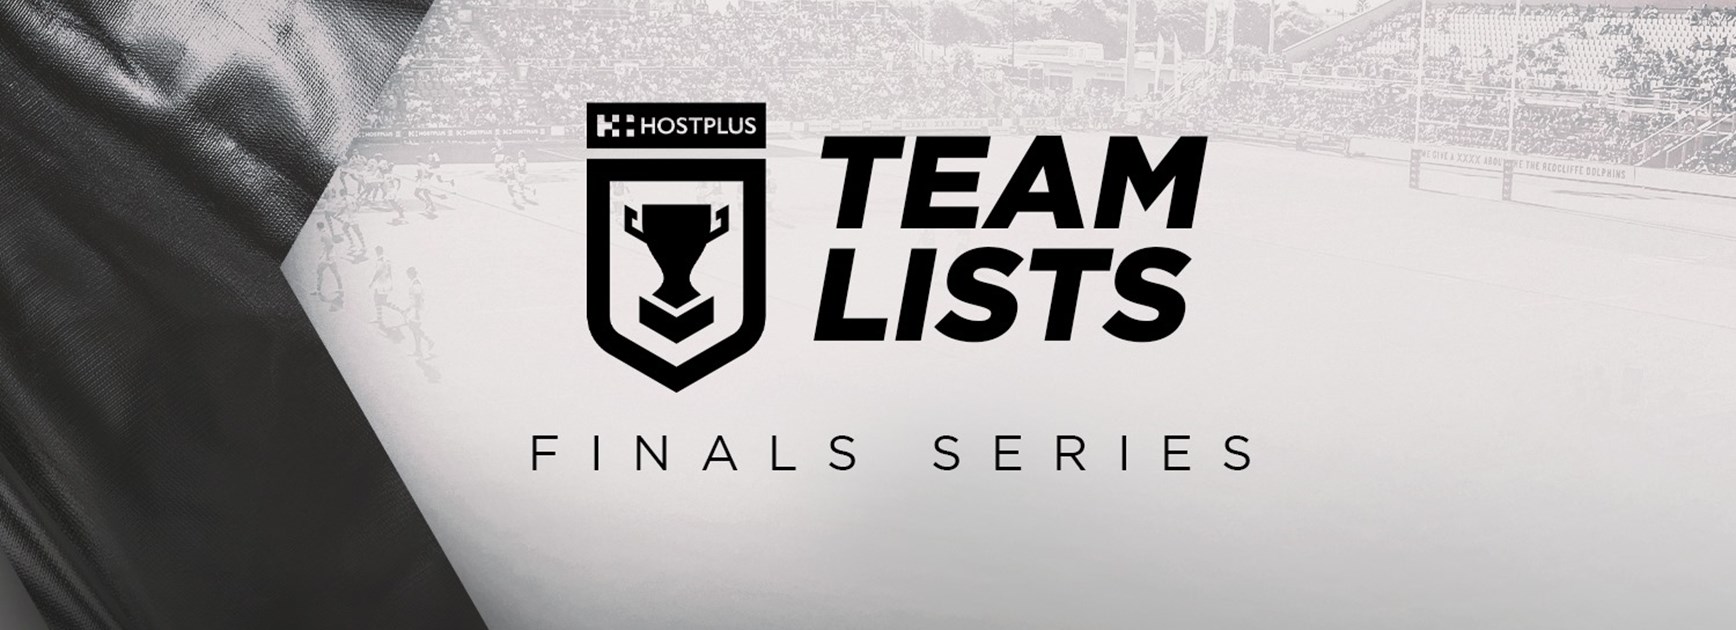 Hostplus Cup Finals Week 3 team lists